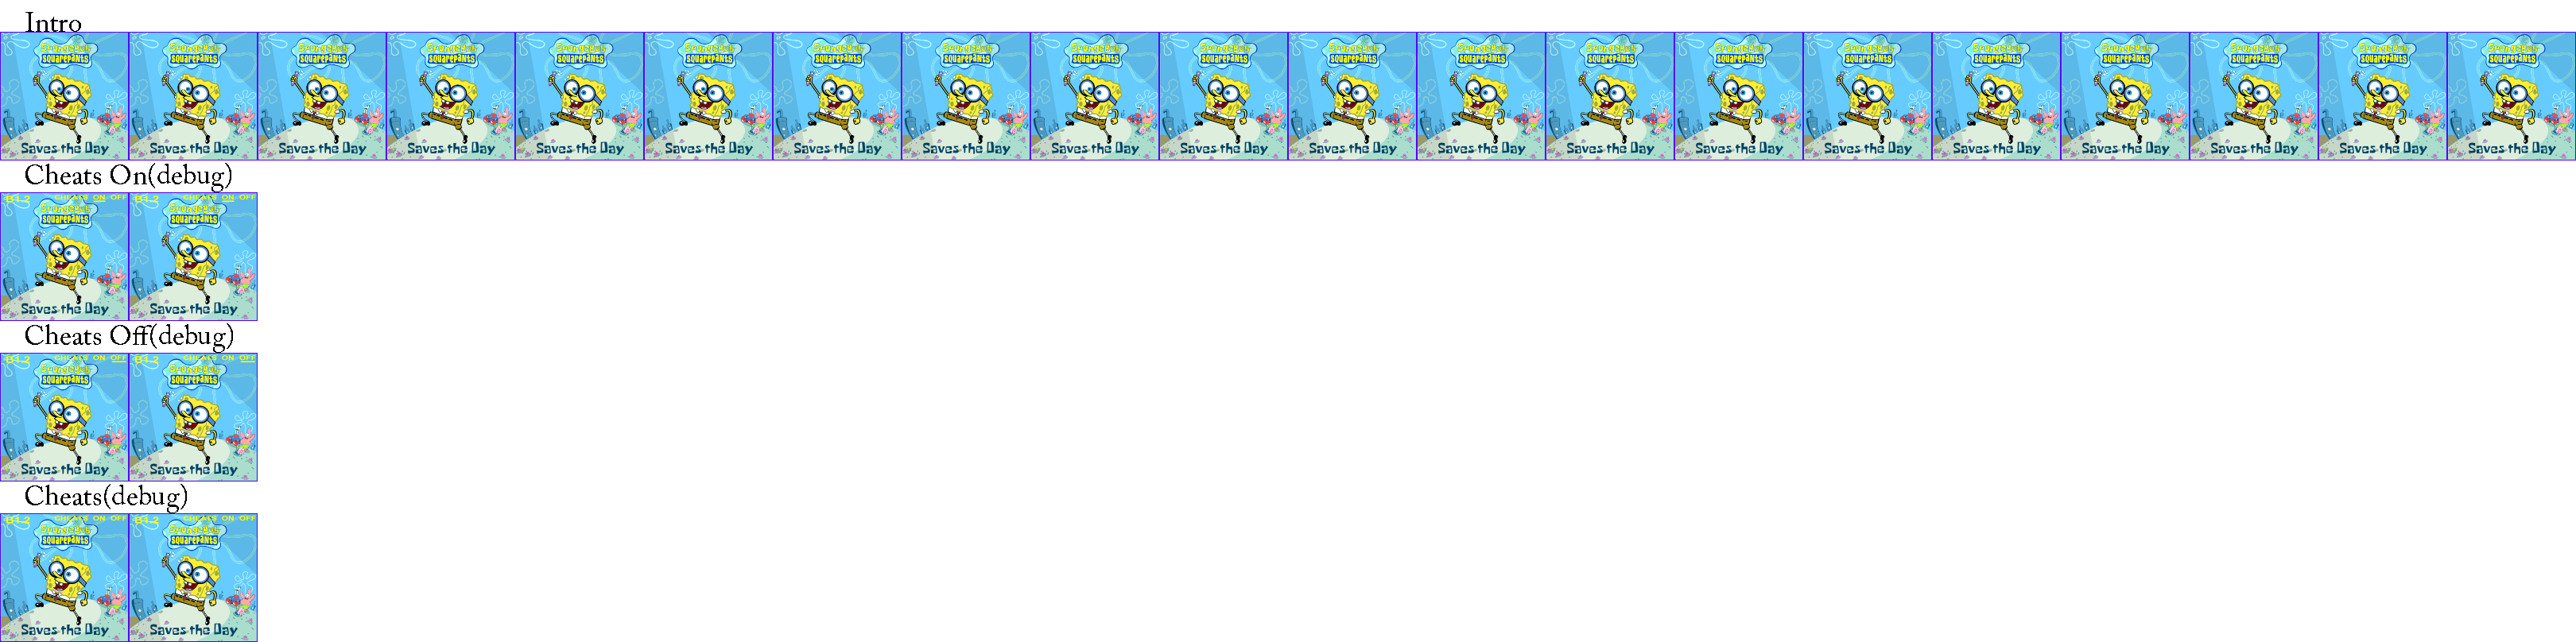 SpongeBob SquarePants Saves the Day - Intro